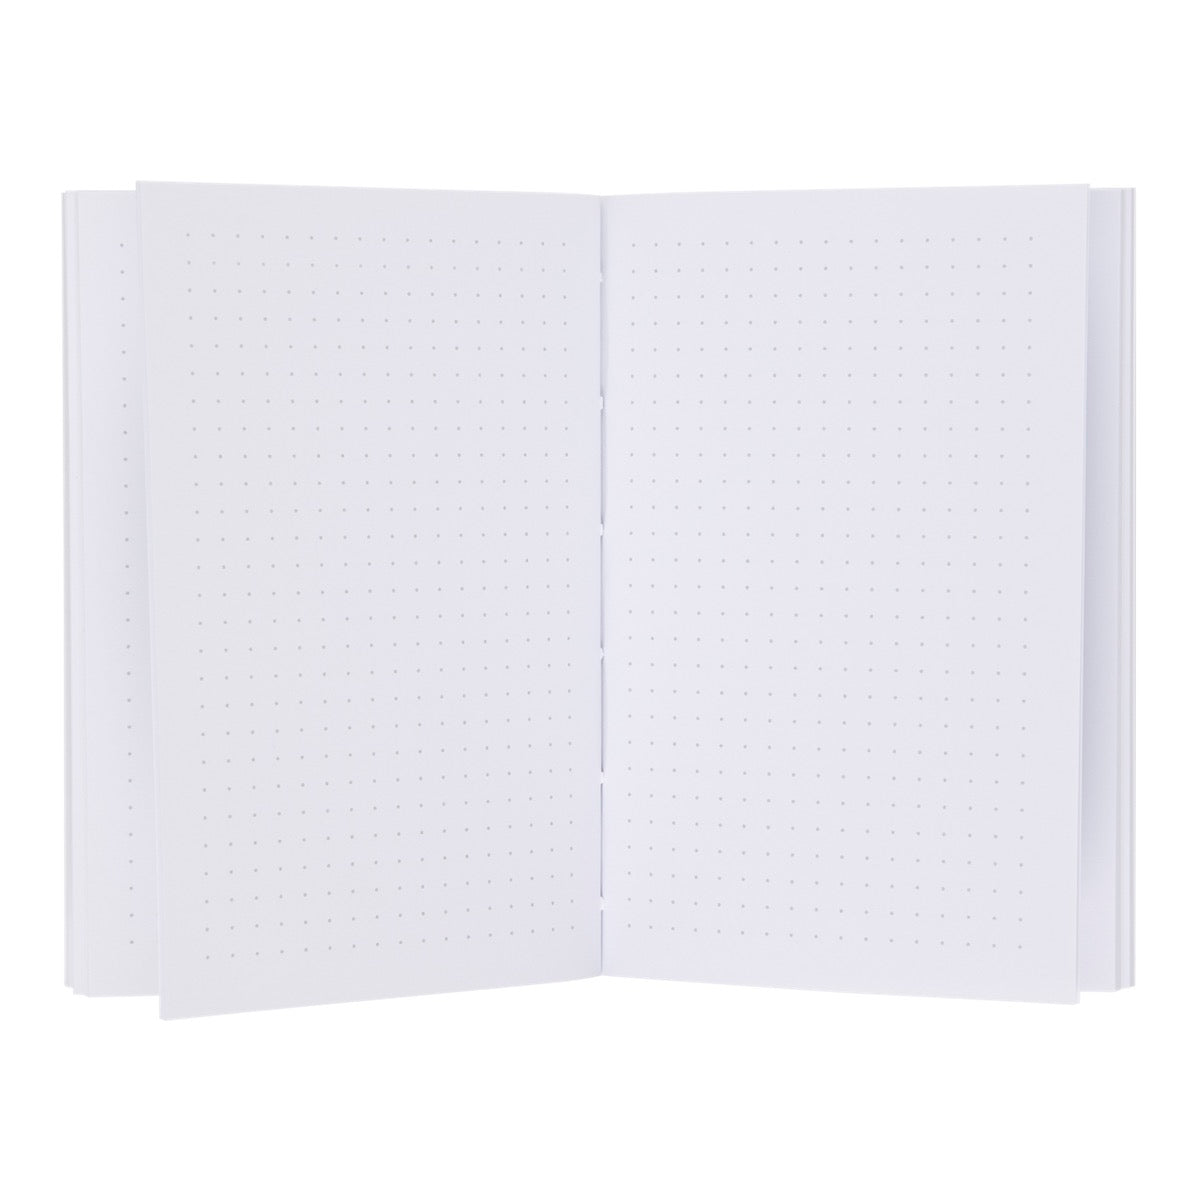 Cuaderno de puntos - formato A6 - azul cielo